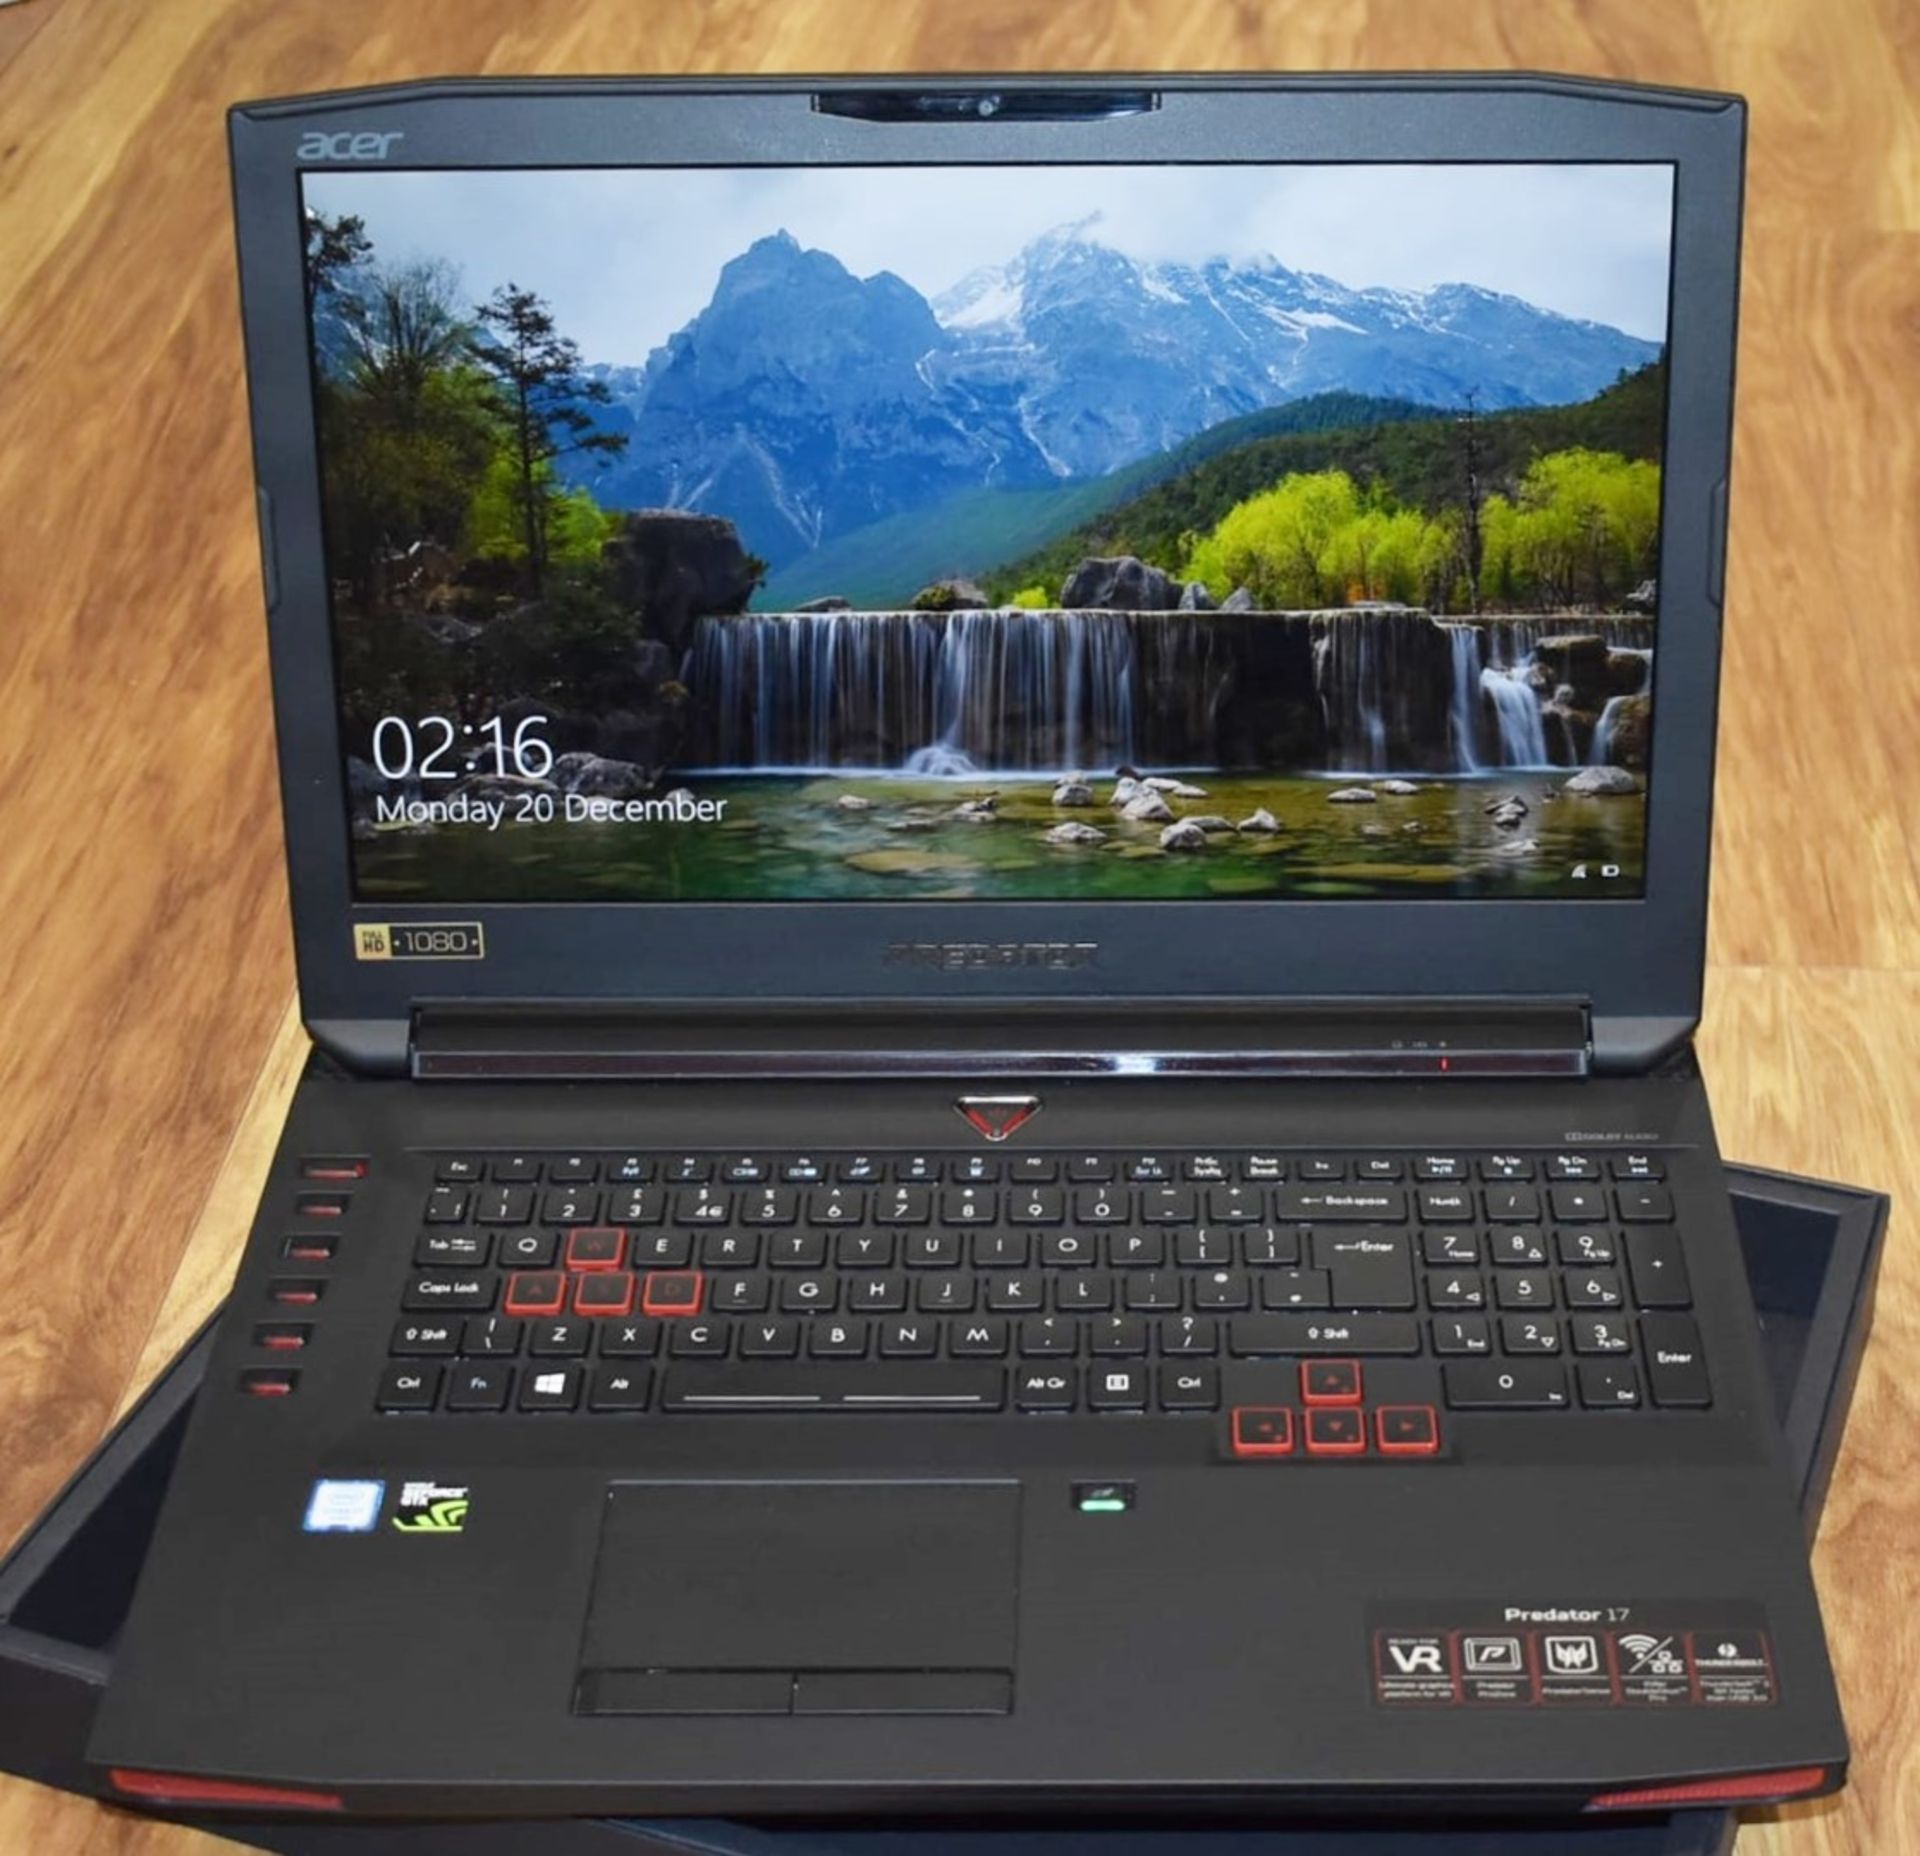 1 x Acer Predator 17 Gaming Laptop - Intel i7 Processor, 16gb DDR4, GTX1060 Graphics, SSD, 17.3" FHD - Image 5 of 17